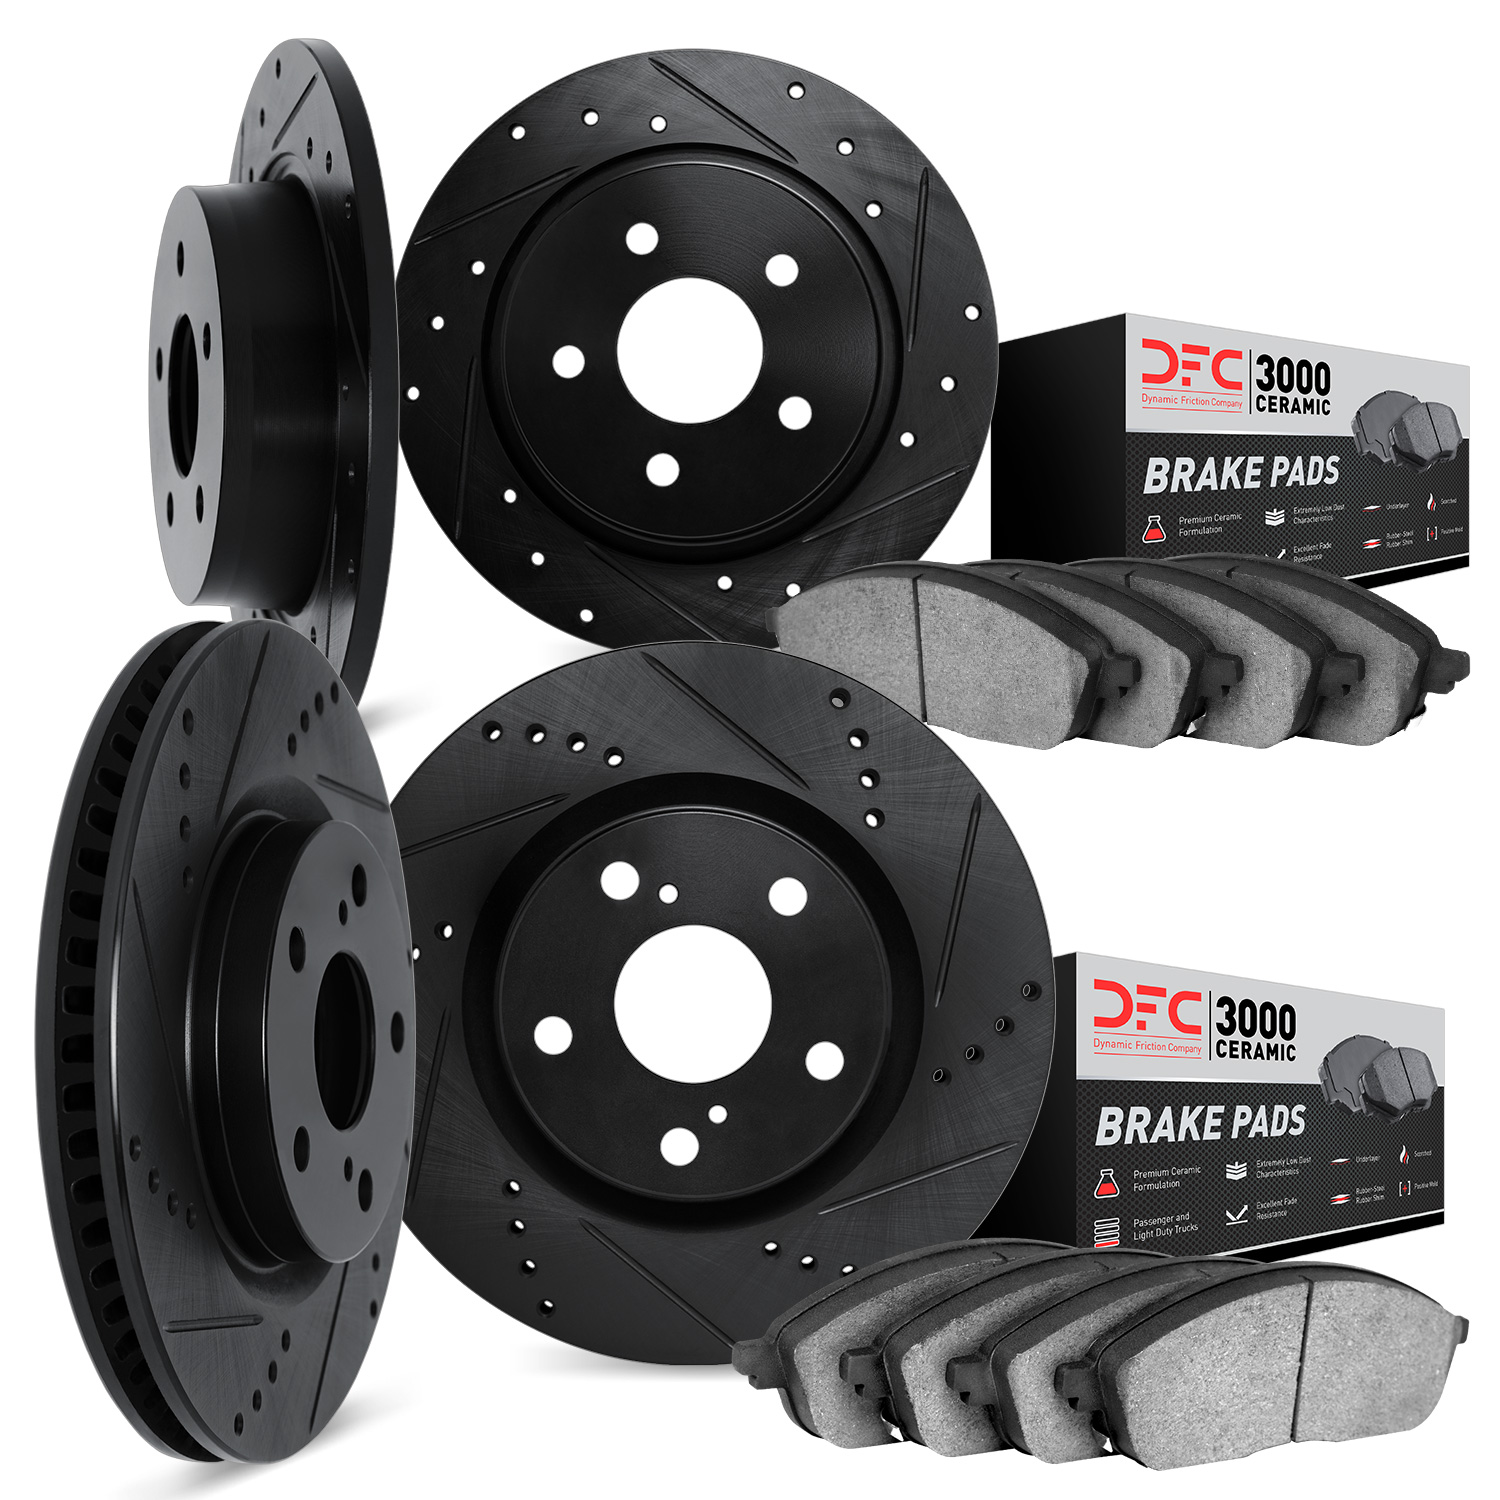 8304-54072 Drilled/Slotted Brake Rotors with 3000-Series Ceramic Brake Pads Kit [Black], 2013-2018 Ford/Lincoln/Mercury/Mazda, P